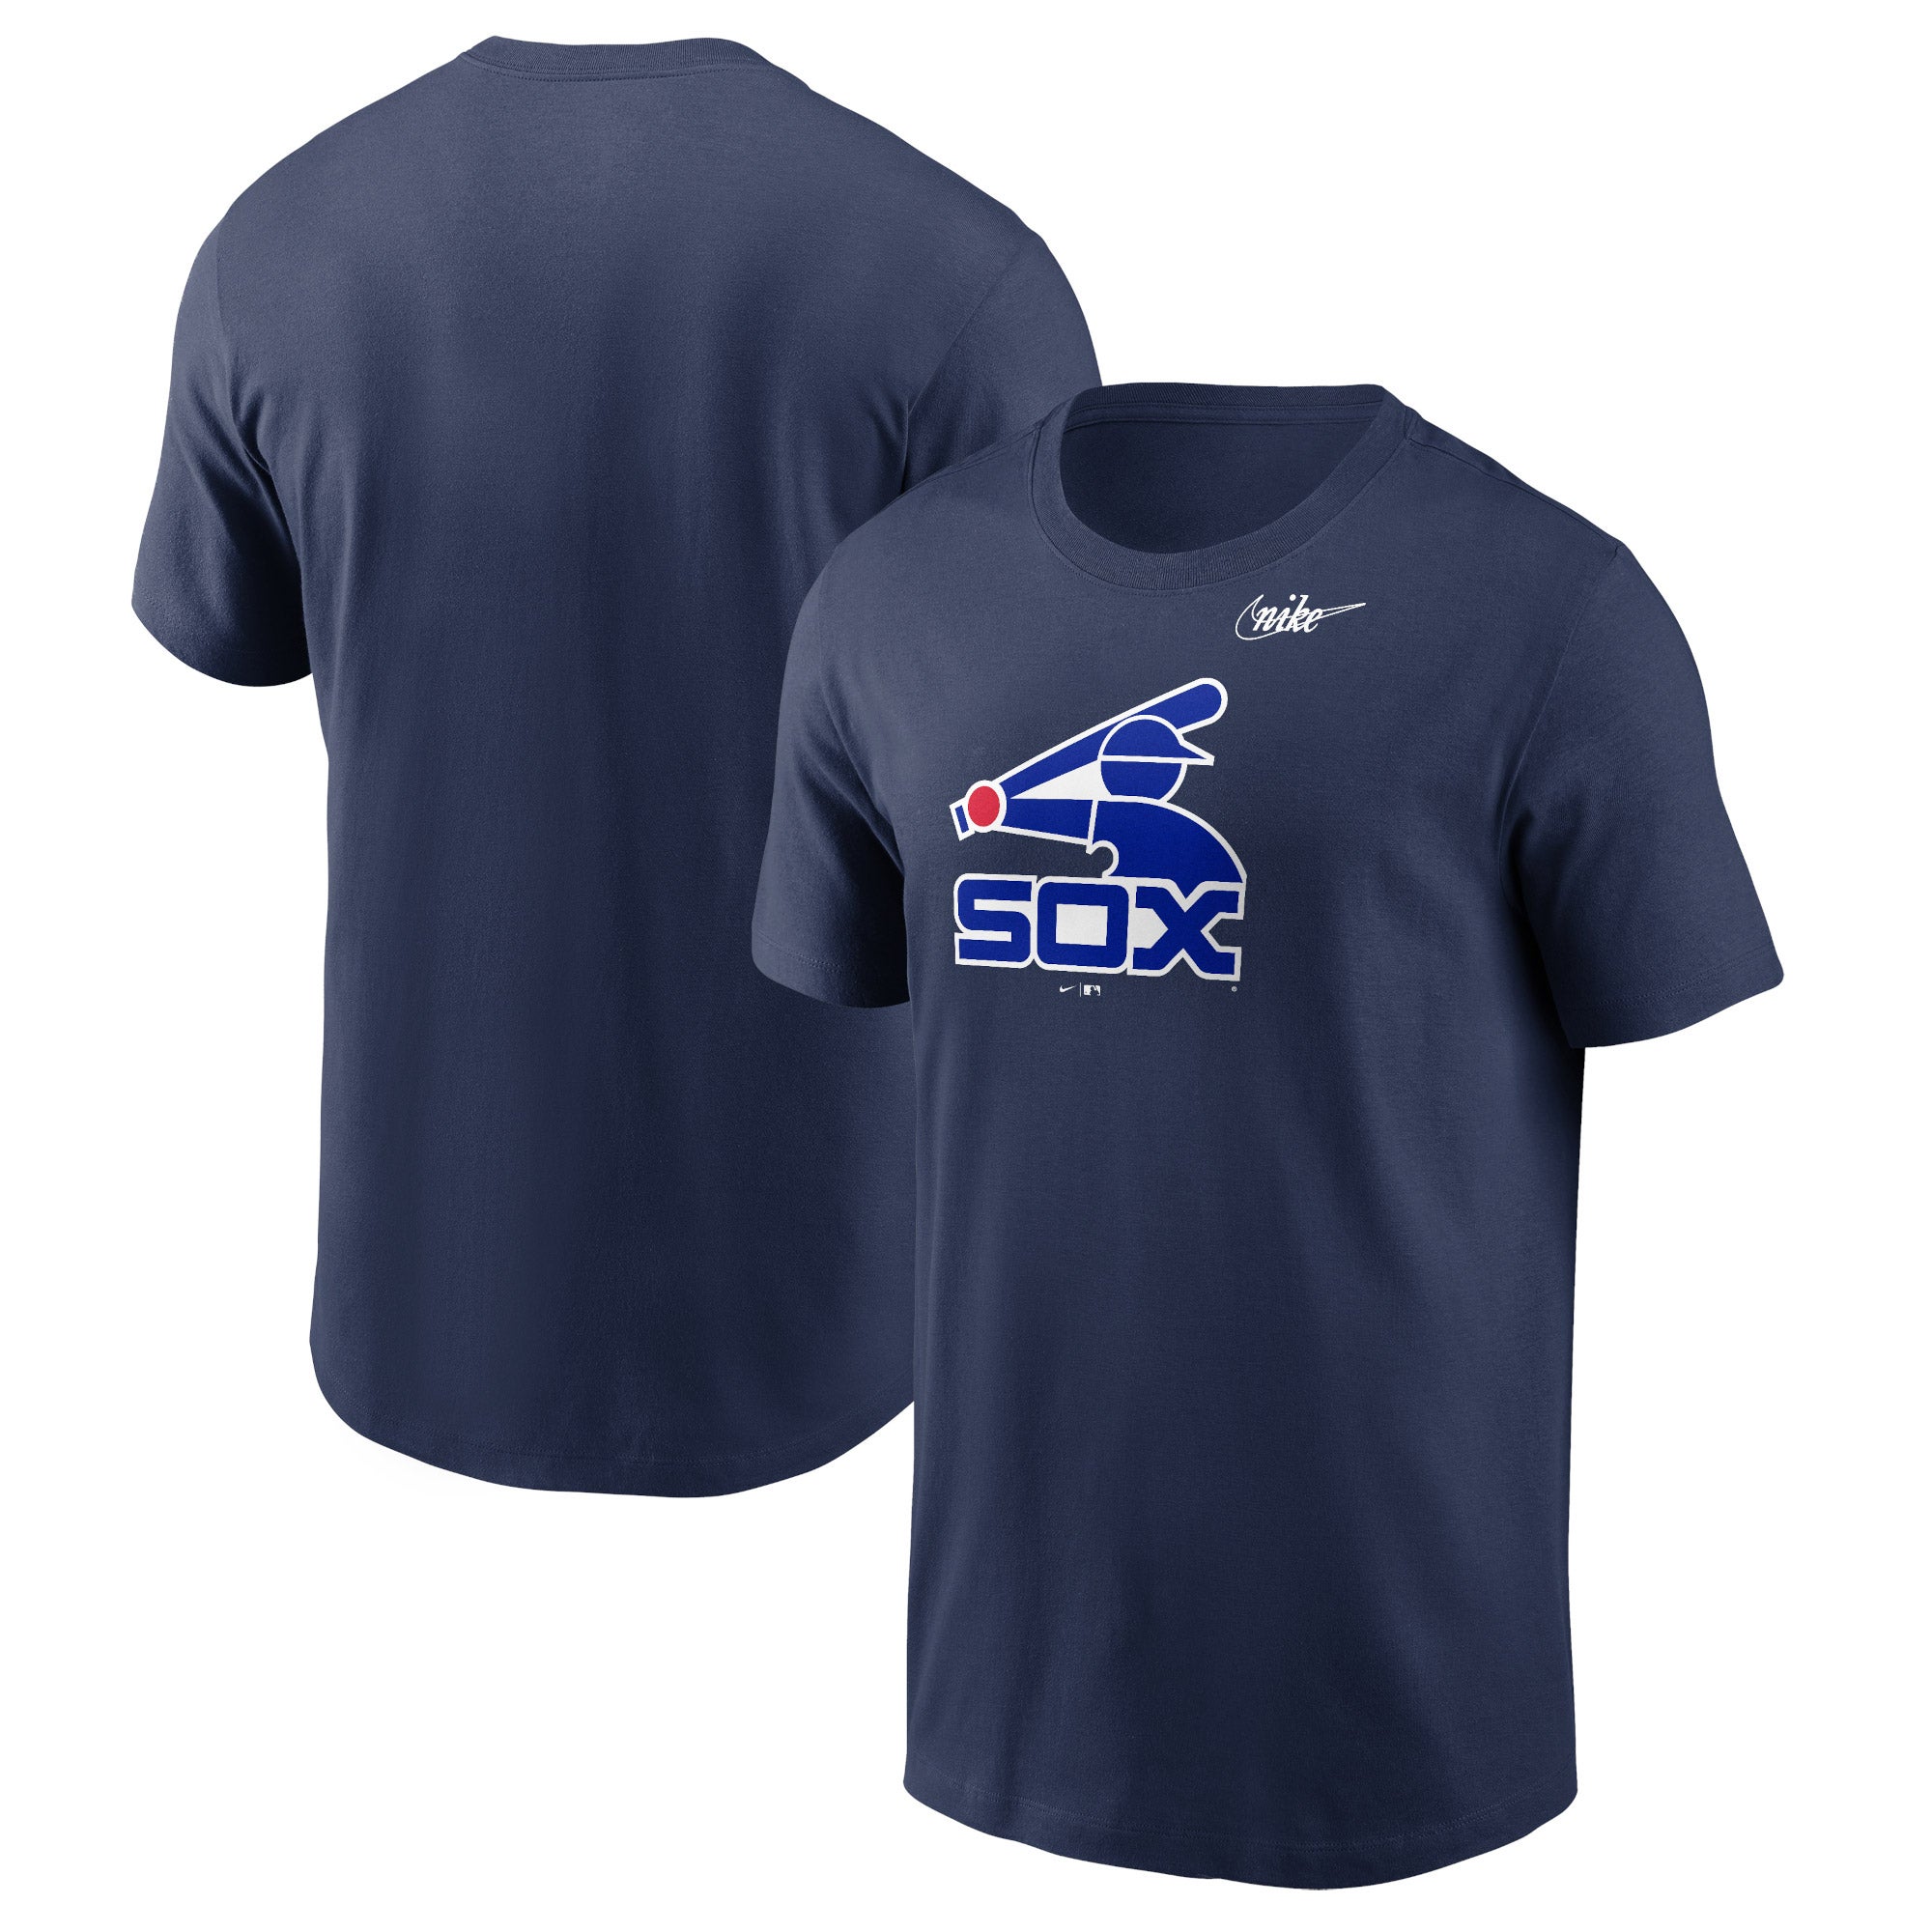 Nike White Sox Cooperstown Logo T-Shirt